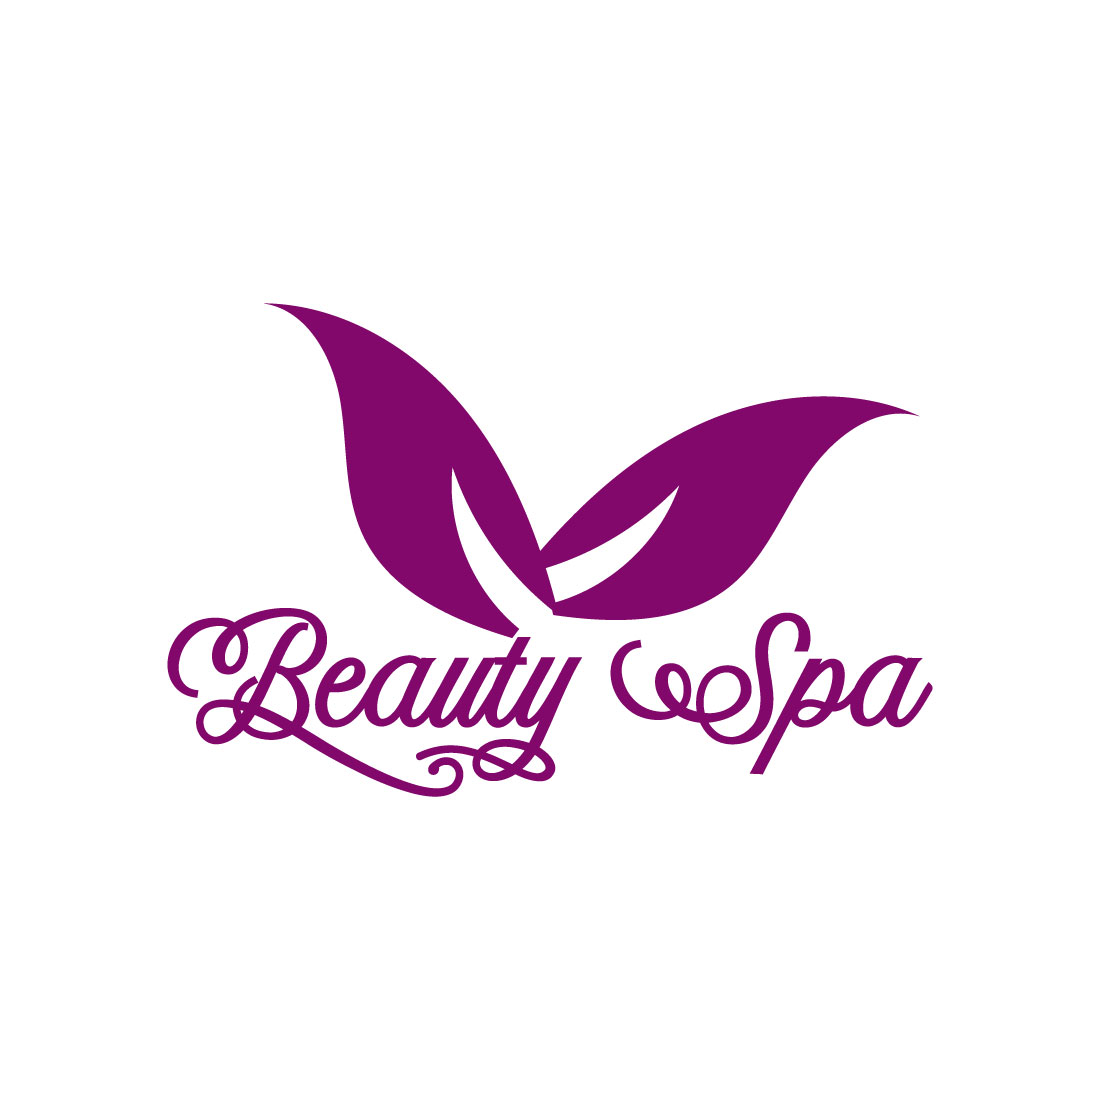 Free Spa Beauty logo preview image.